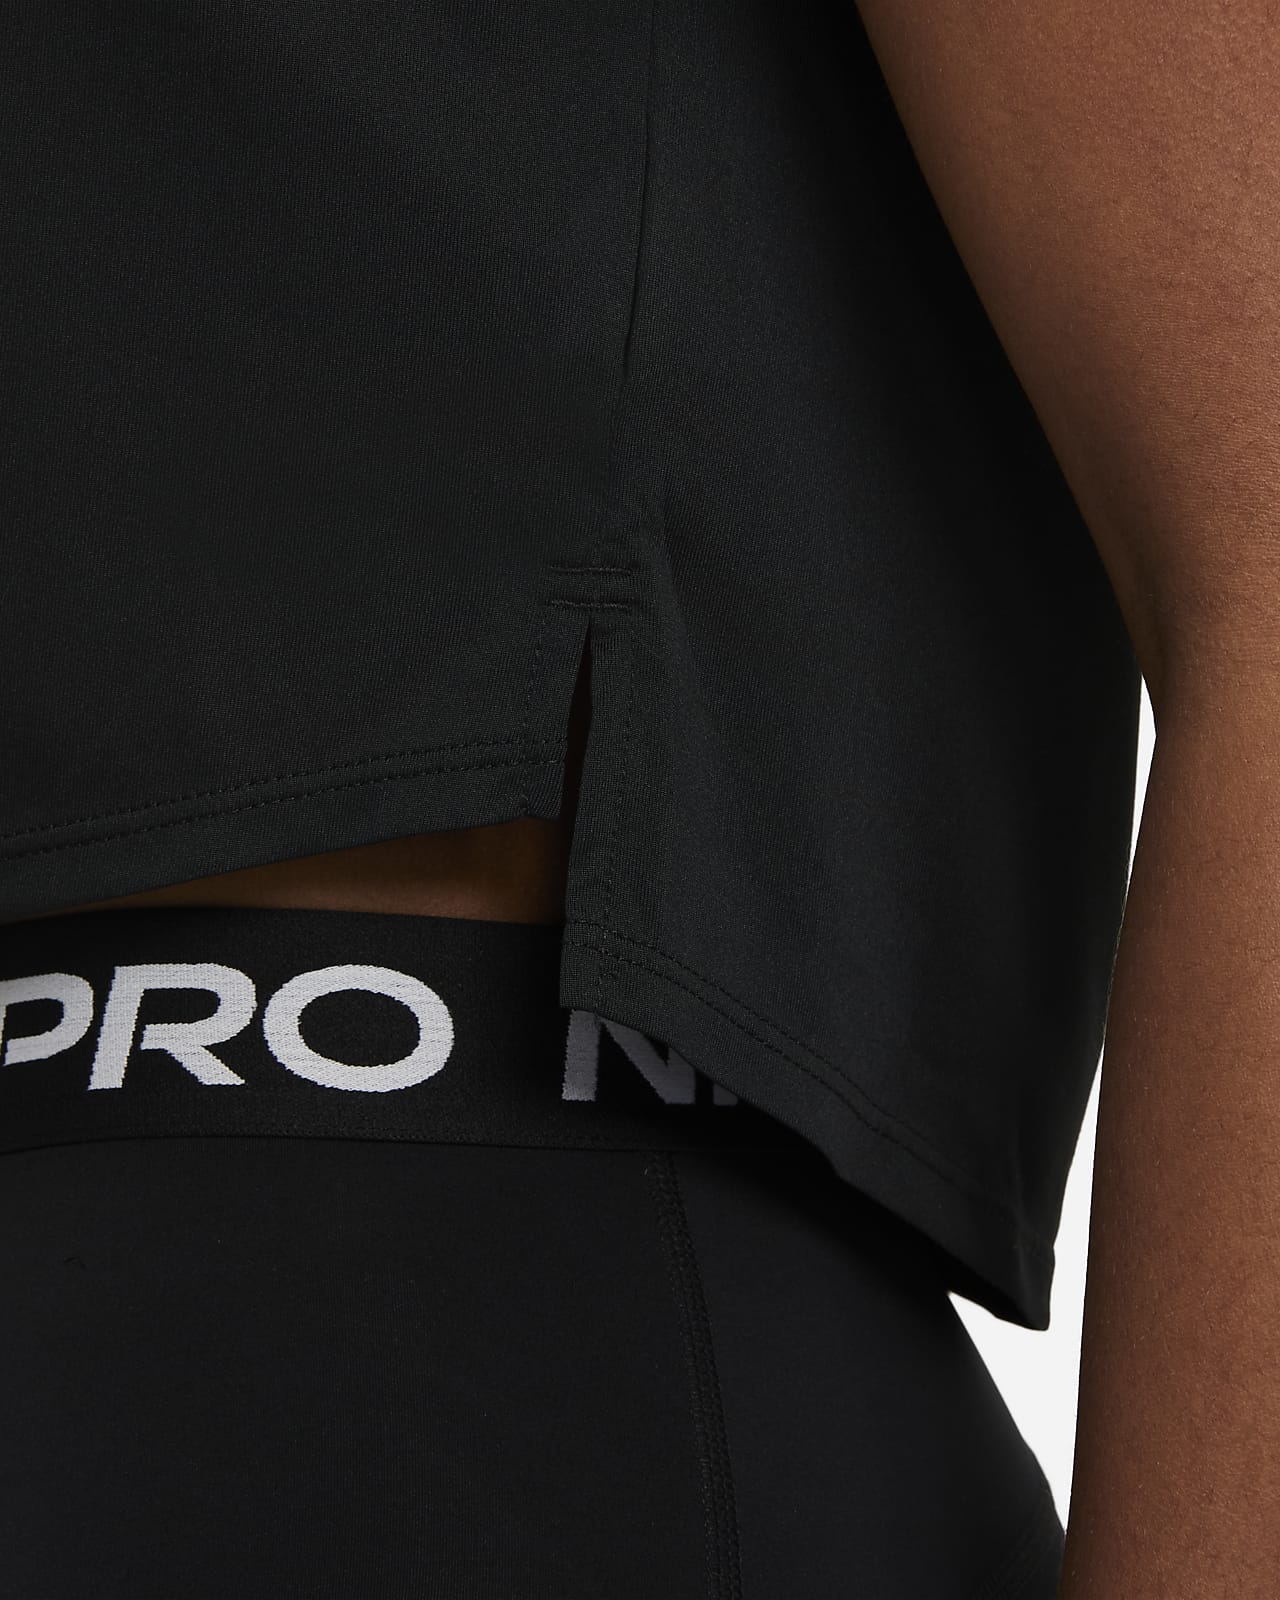 Nike Dri-Fit black cropped athletic mesh insert reflective capri